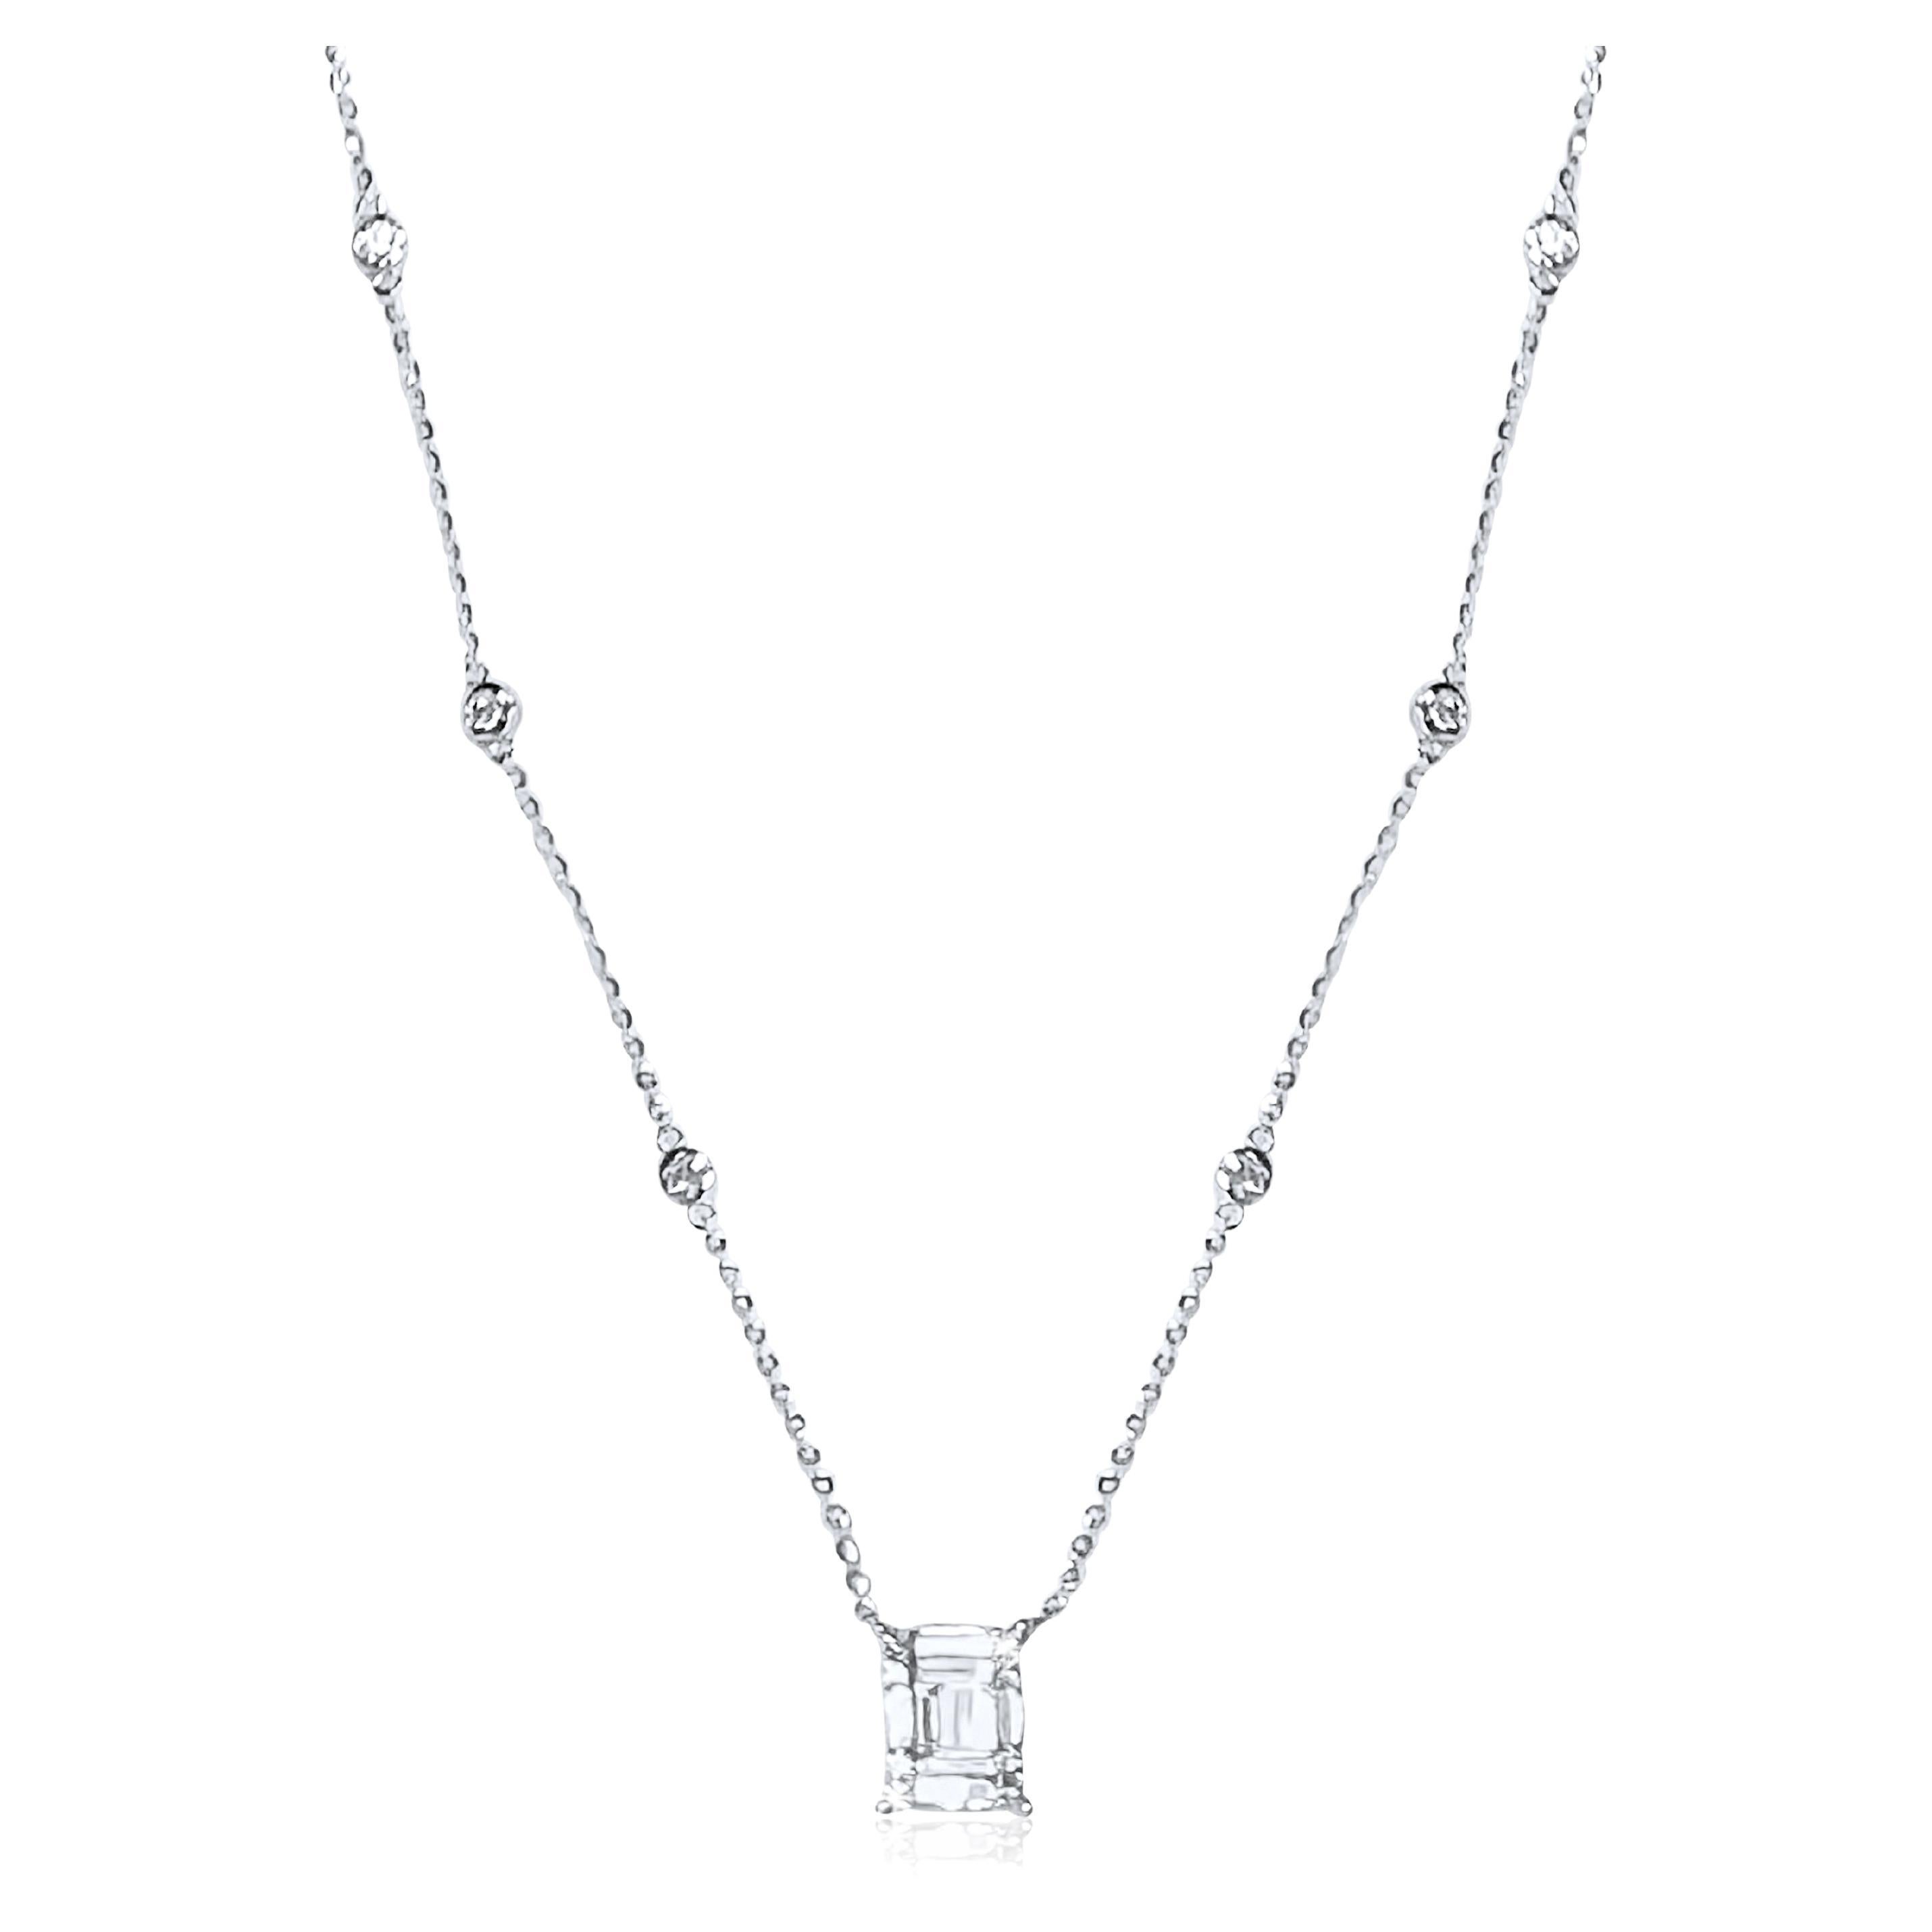 Norah's Diamond Necklace